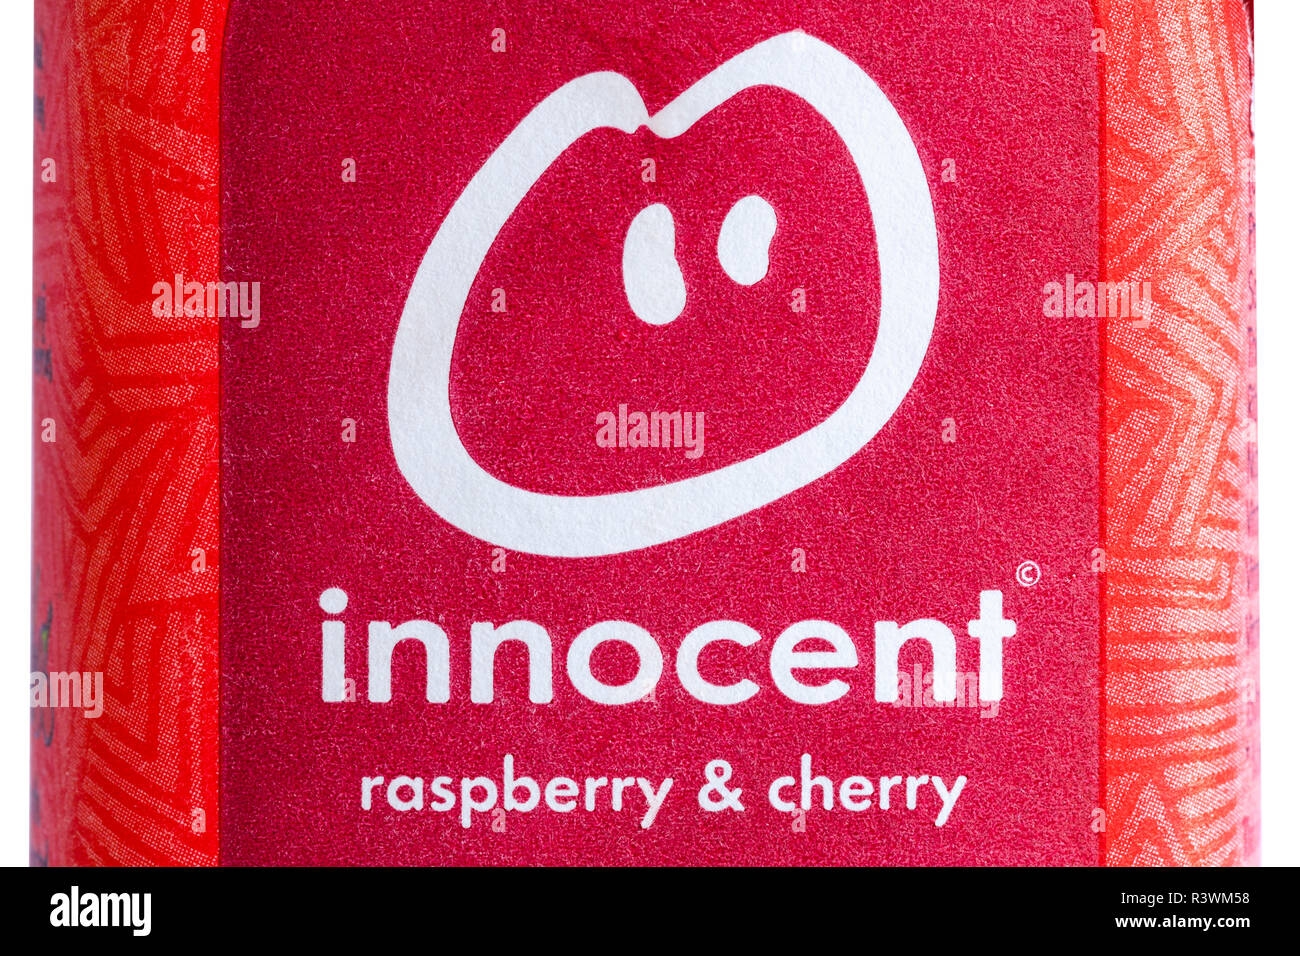 Label on innocent raspberry & cherry drink Stock Photo